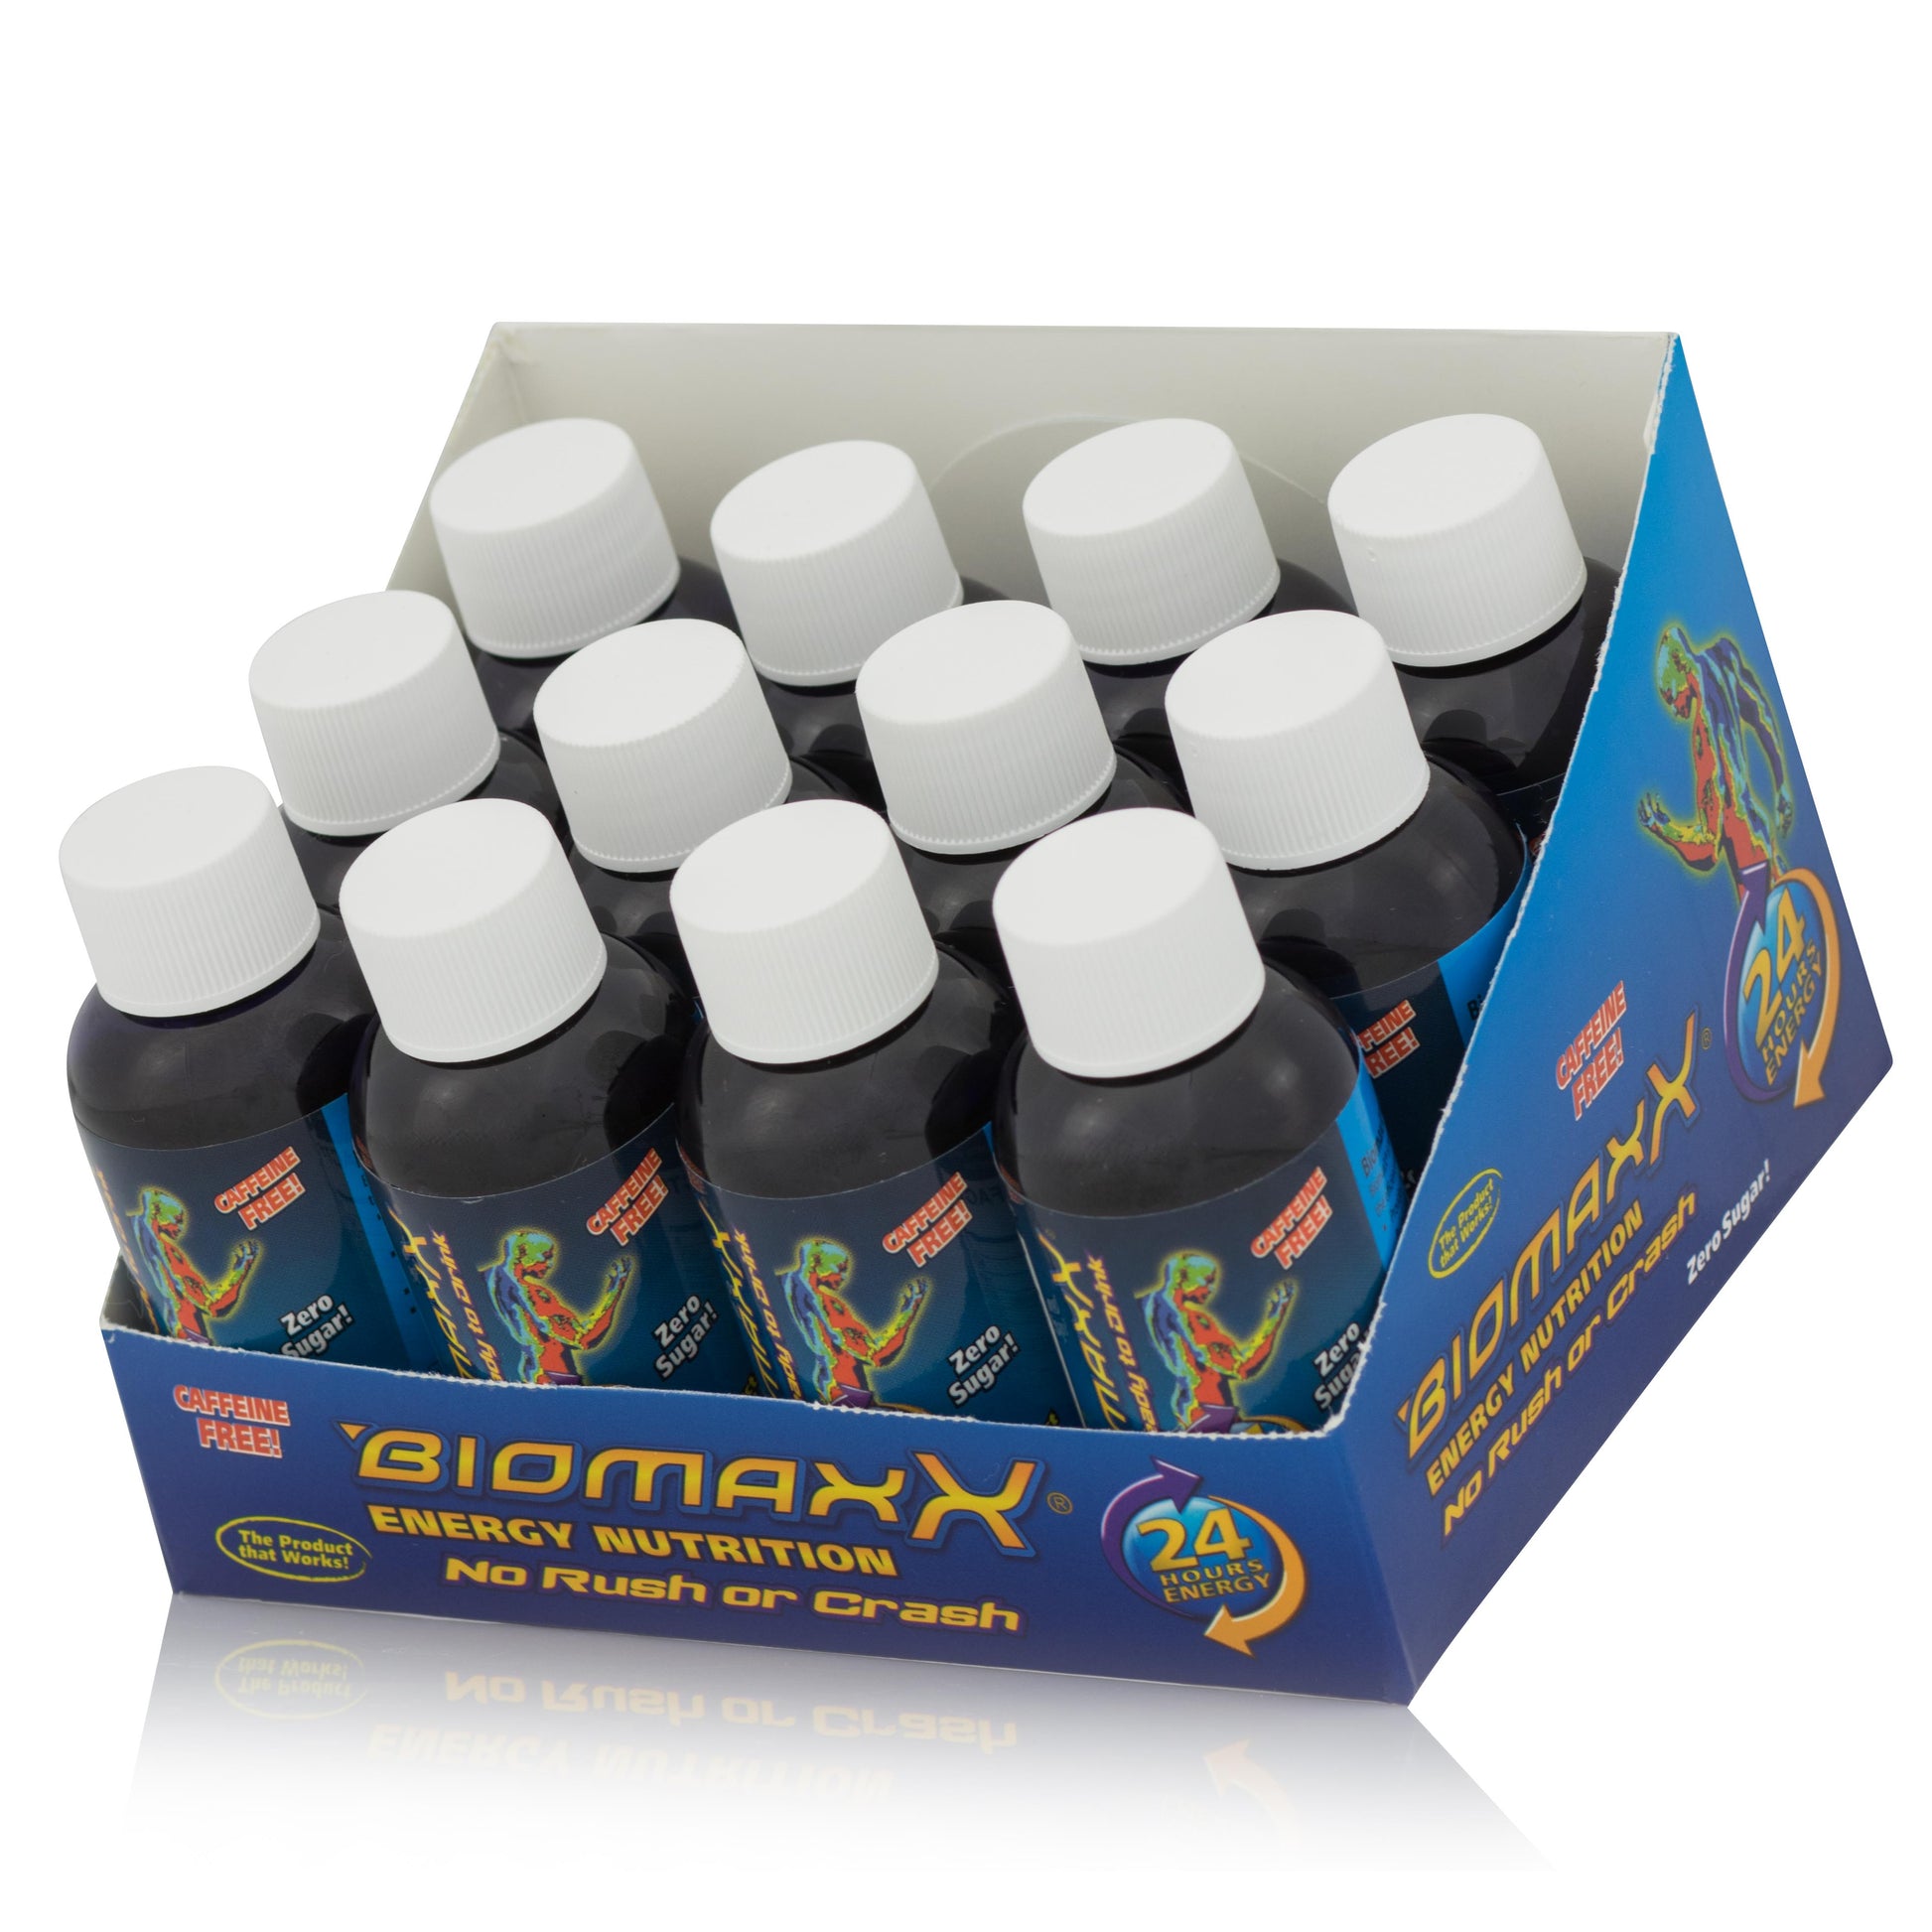 Image of 12 pack of Biomaxx RTD